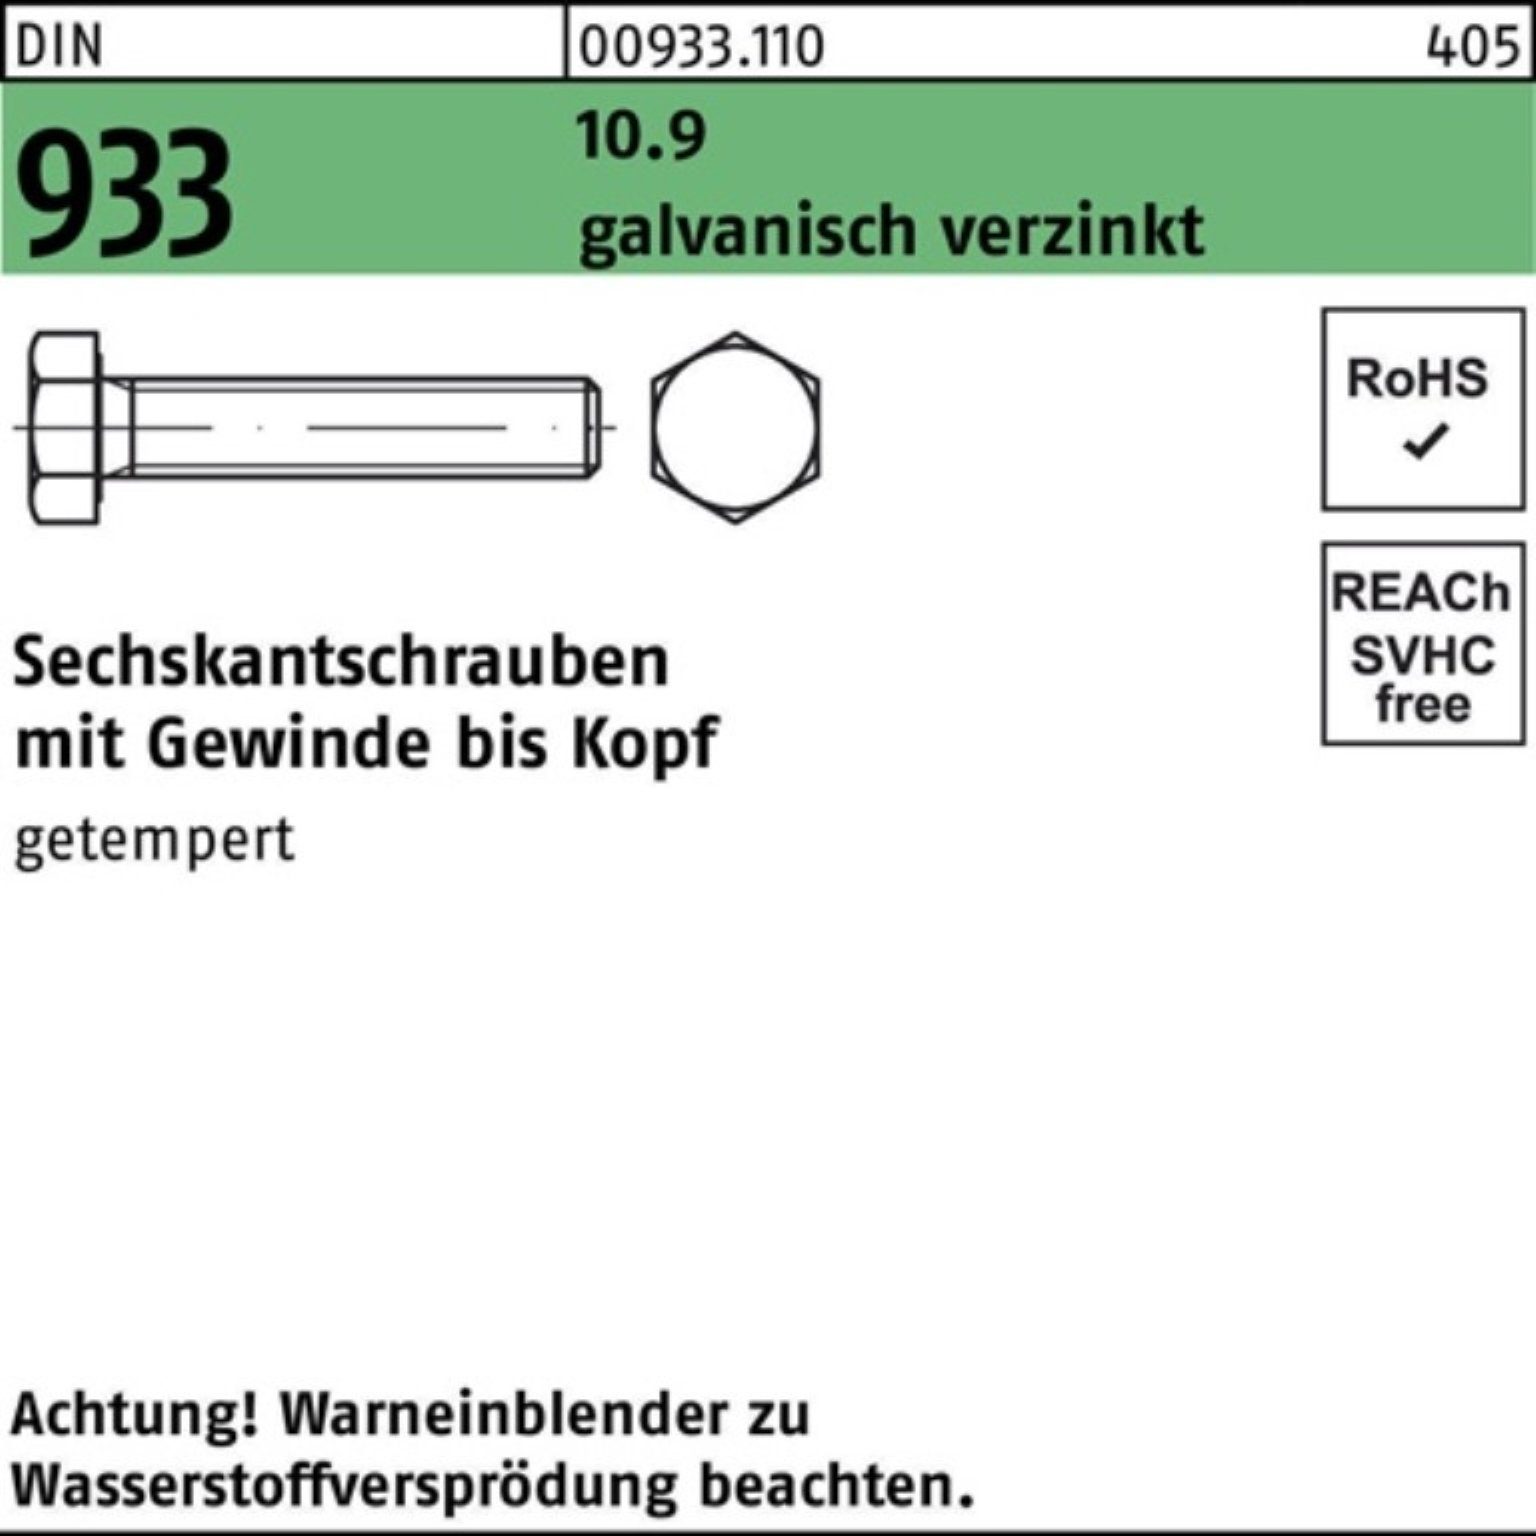 Sechskantschraube 10.9 VG Sechskantschraube Pack 933 Reyher DIN galv.verz. 500 M6x 500er St 12